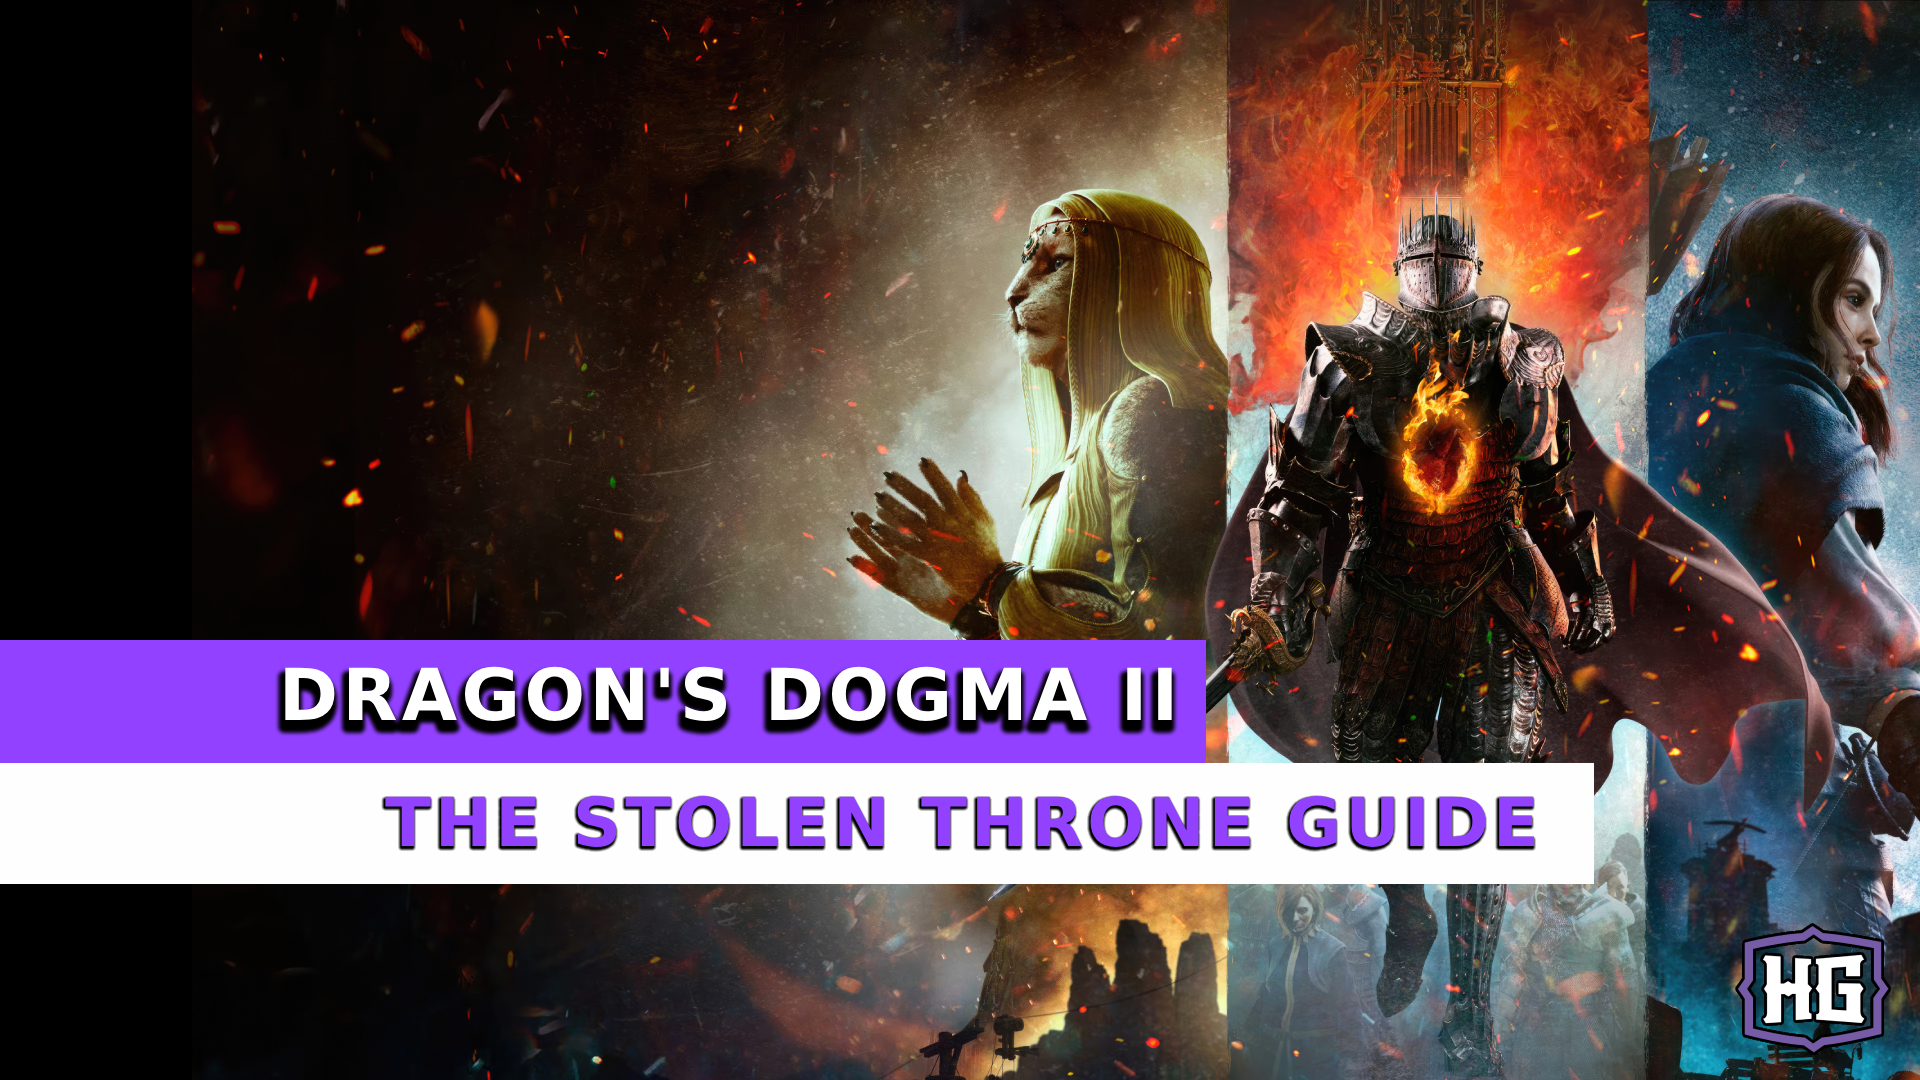 the stolen throne guide dd2